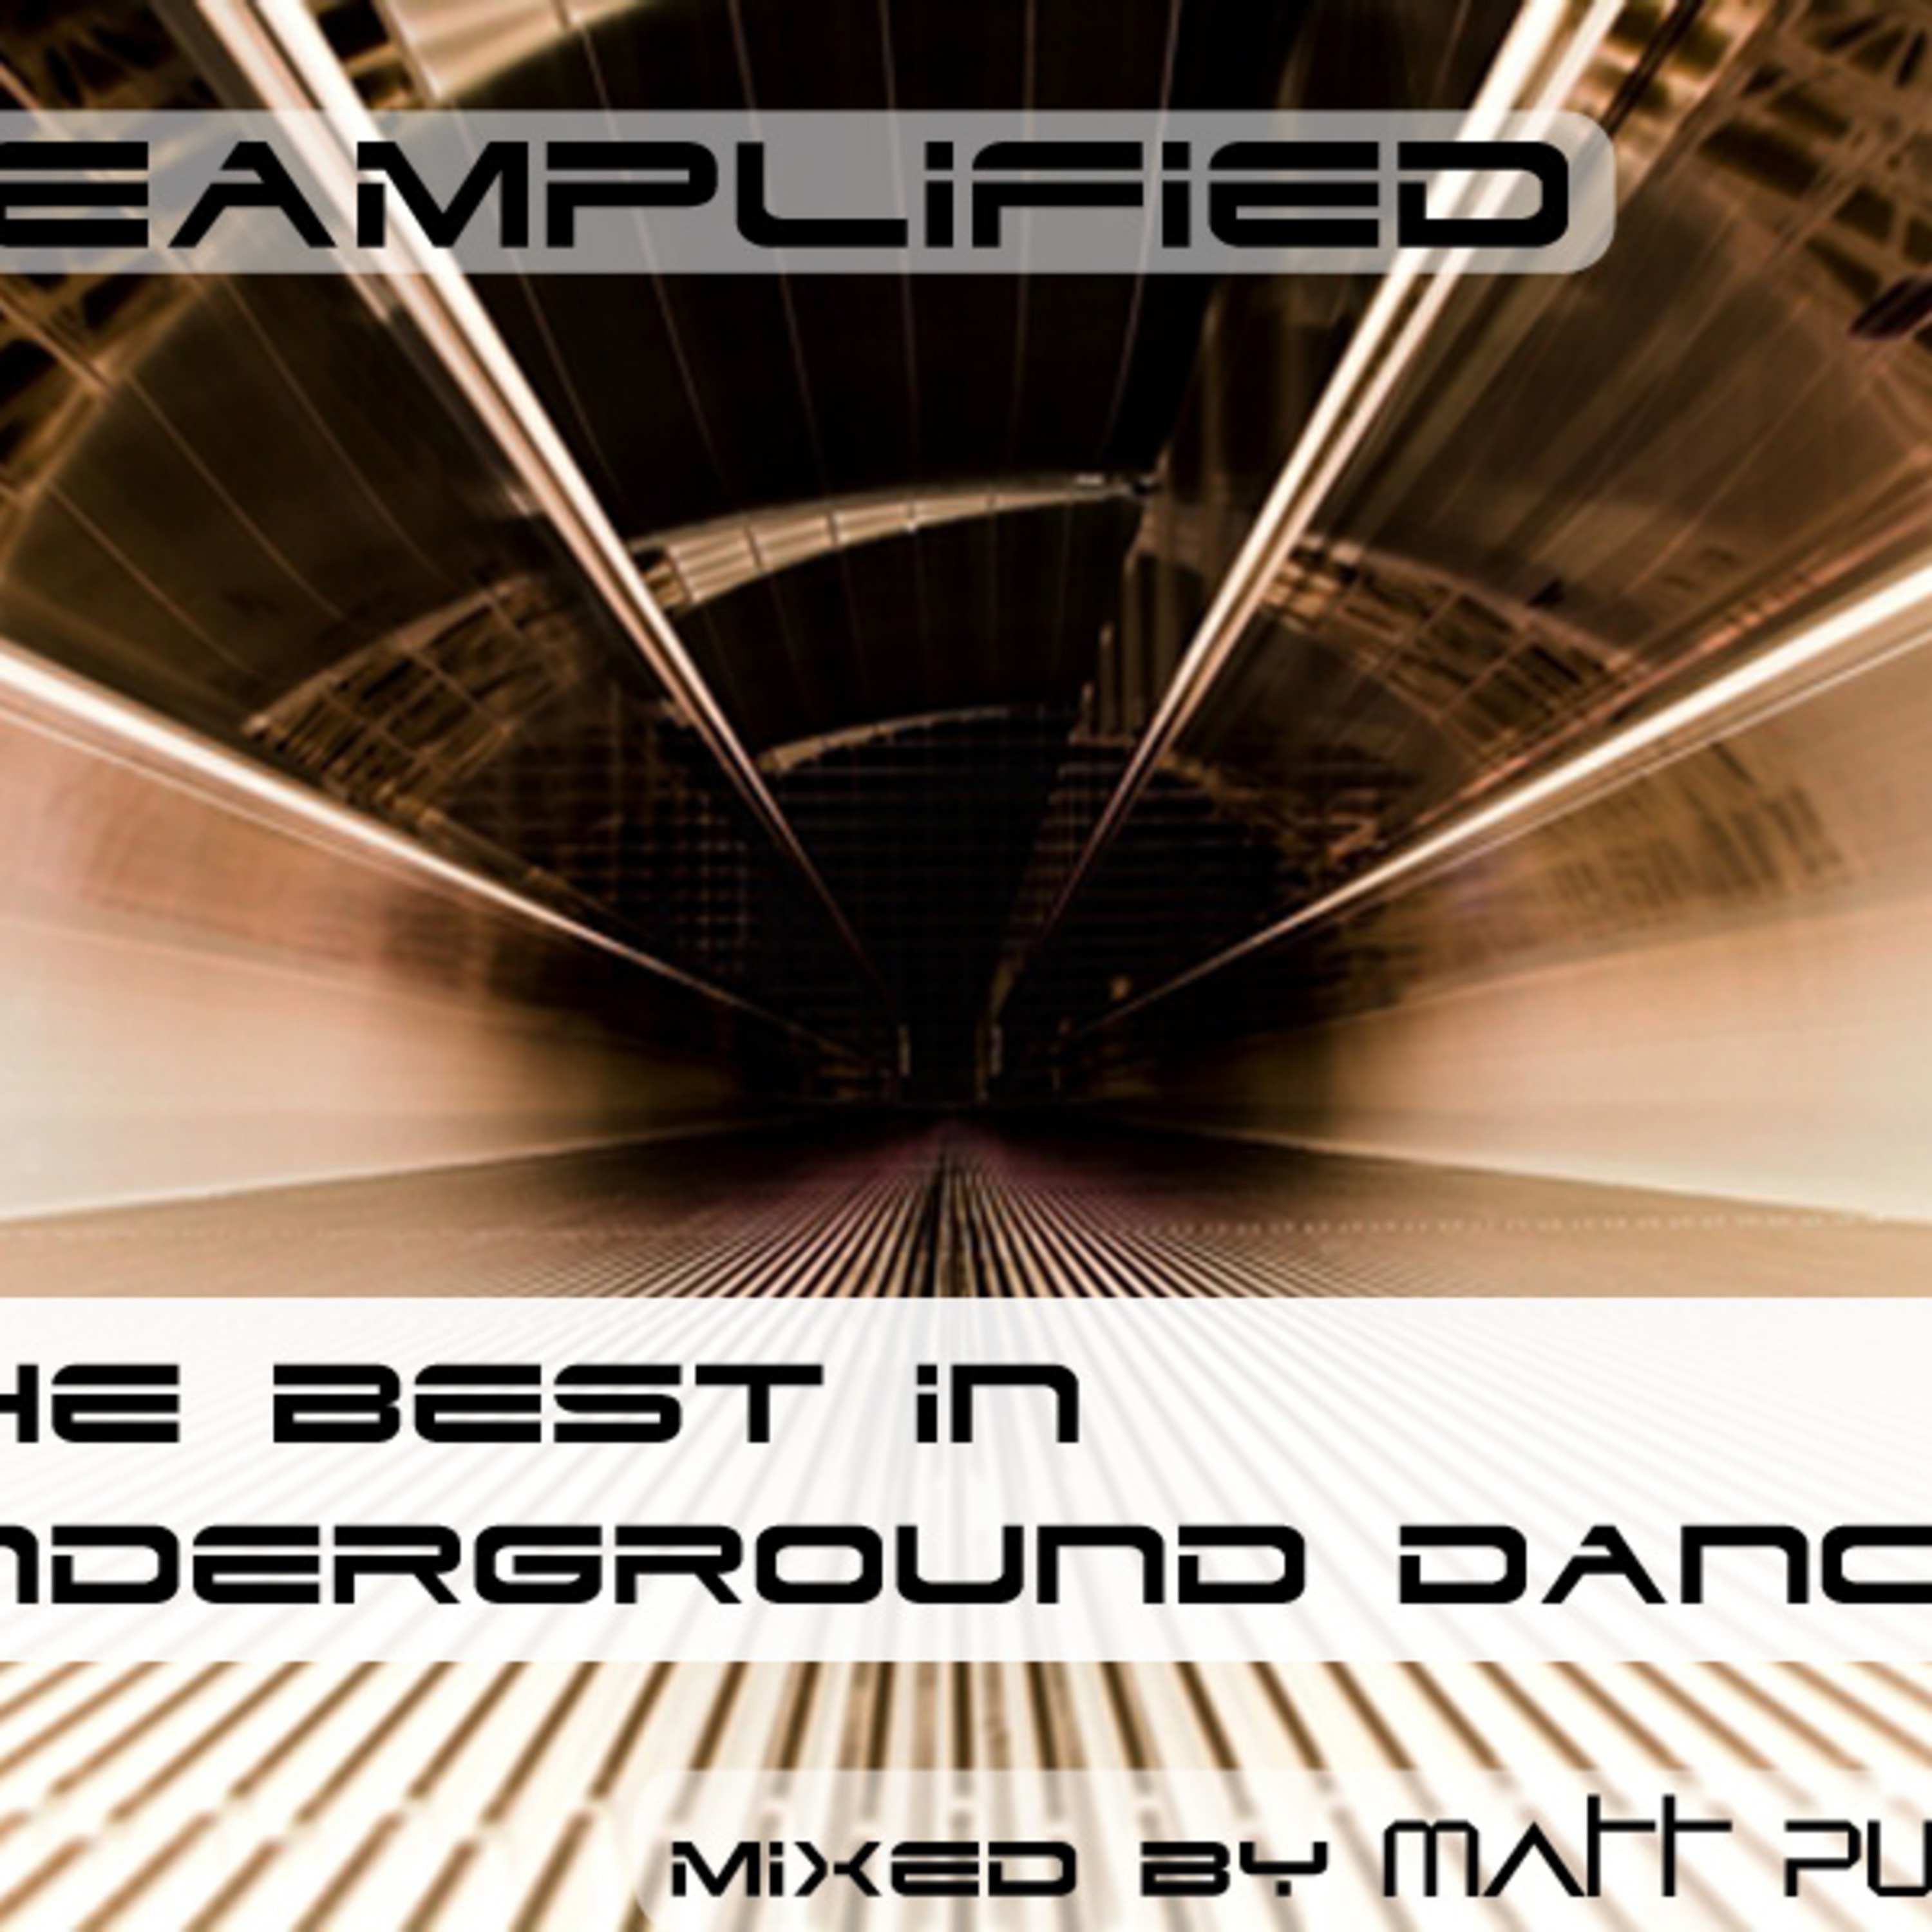 Reamplified - The best in underground dance music!